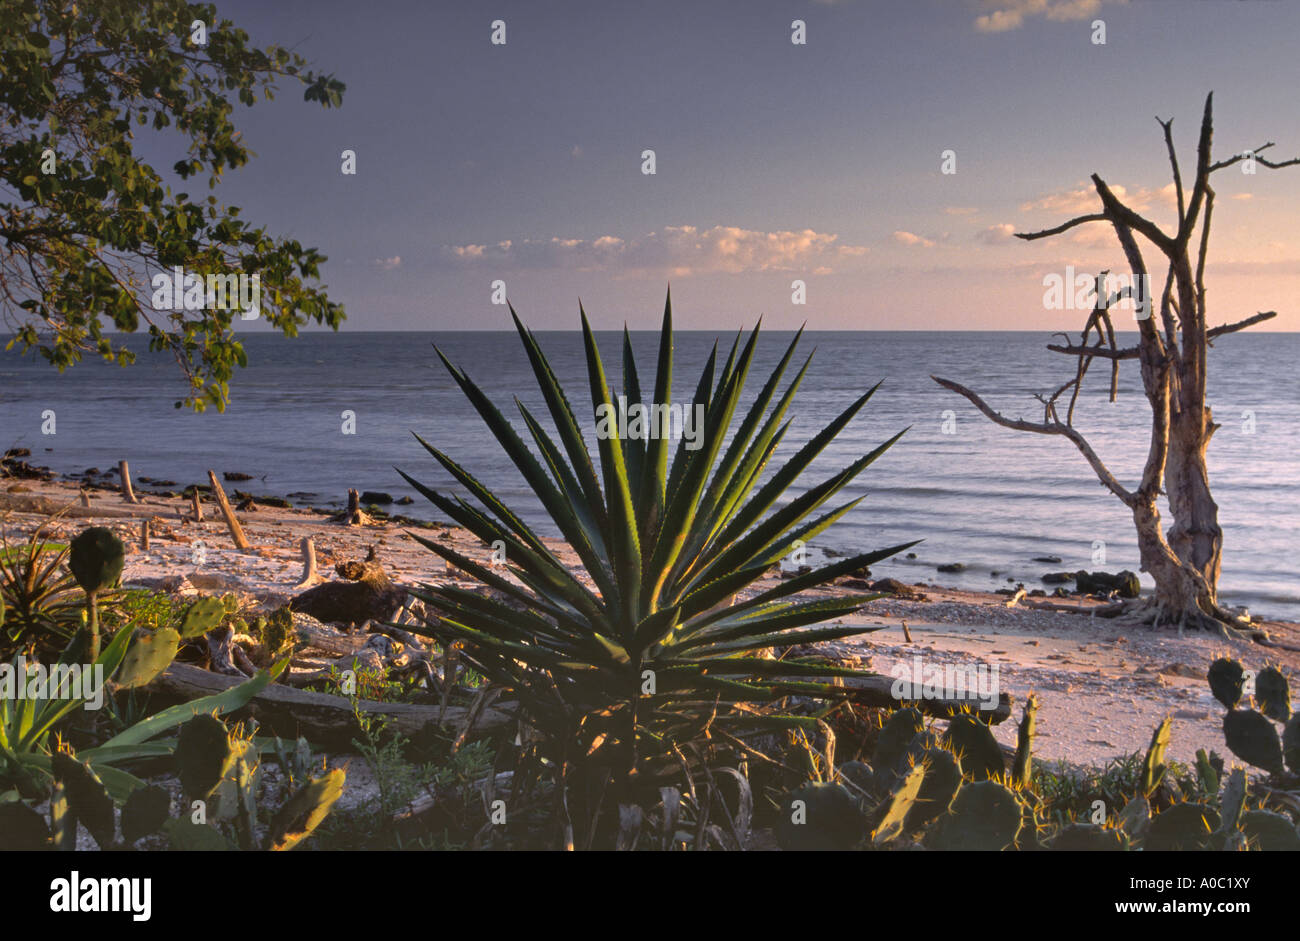 Spanish dagger, prickly pear cacti on beach at Jewel Key, Ten Thousand Islands area, Everglades Nat Park, Florida, USA Stock Photo